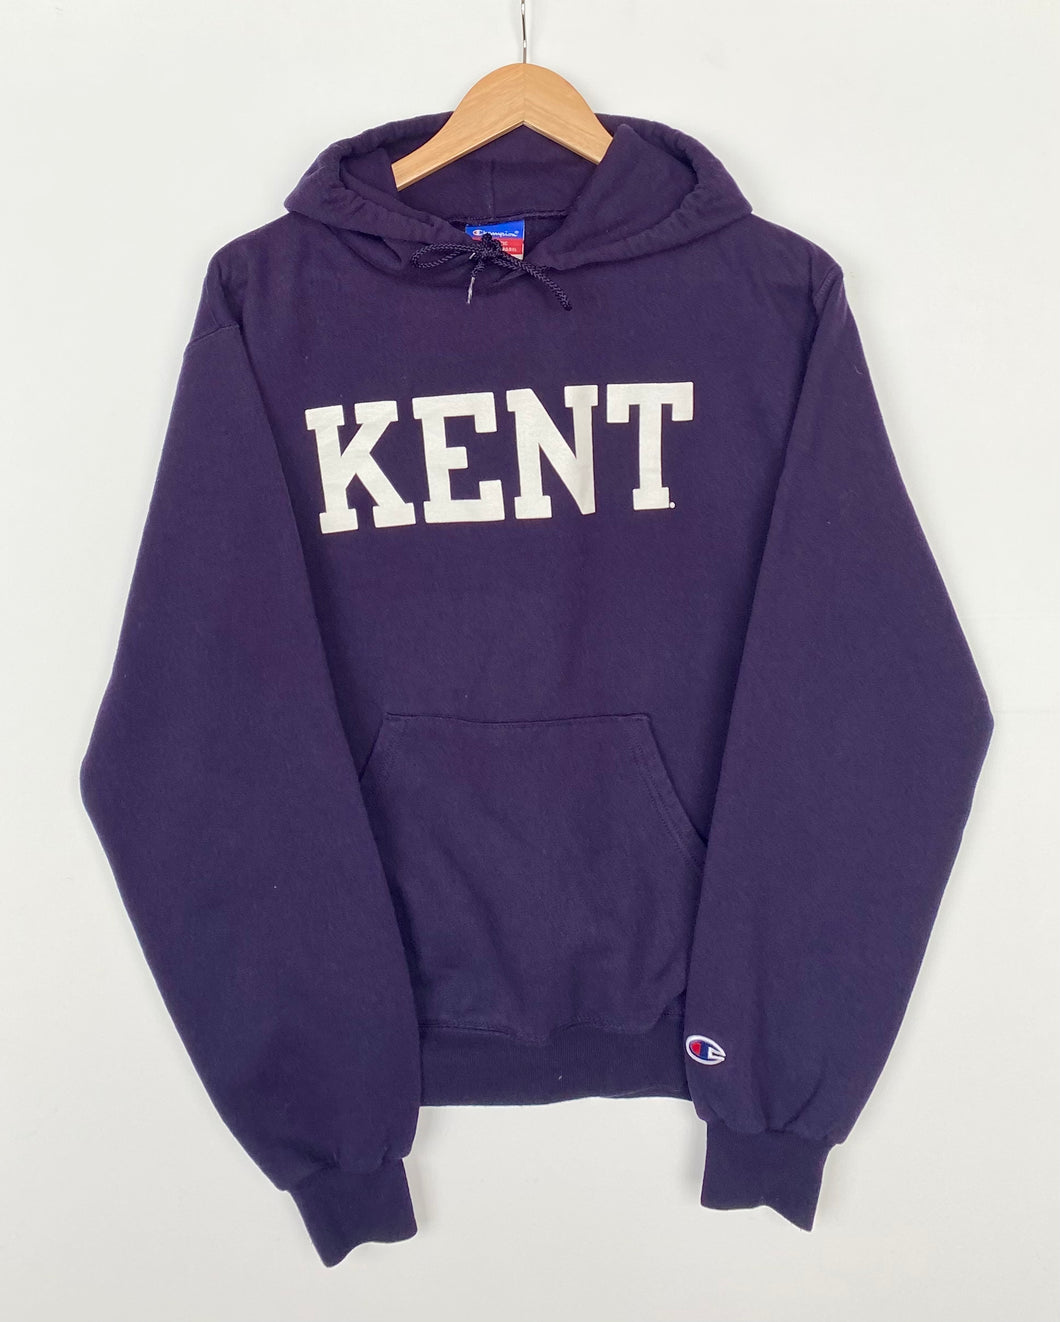 Champion Kent hoodie (S)